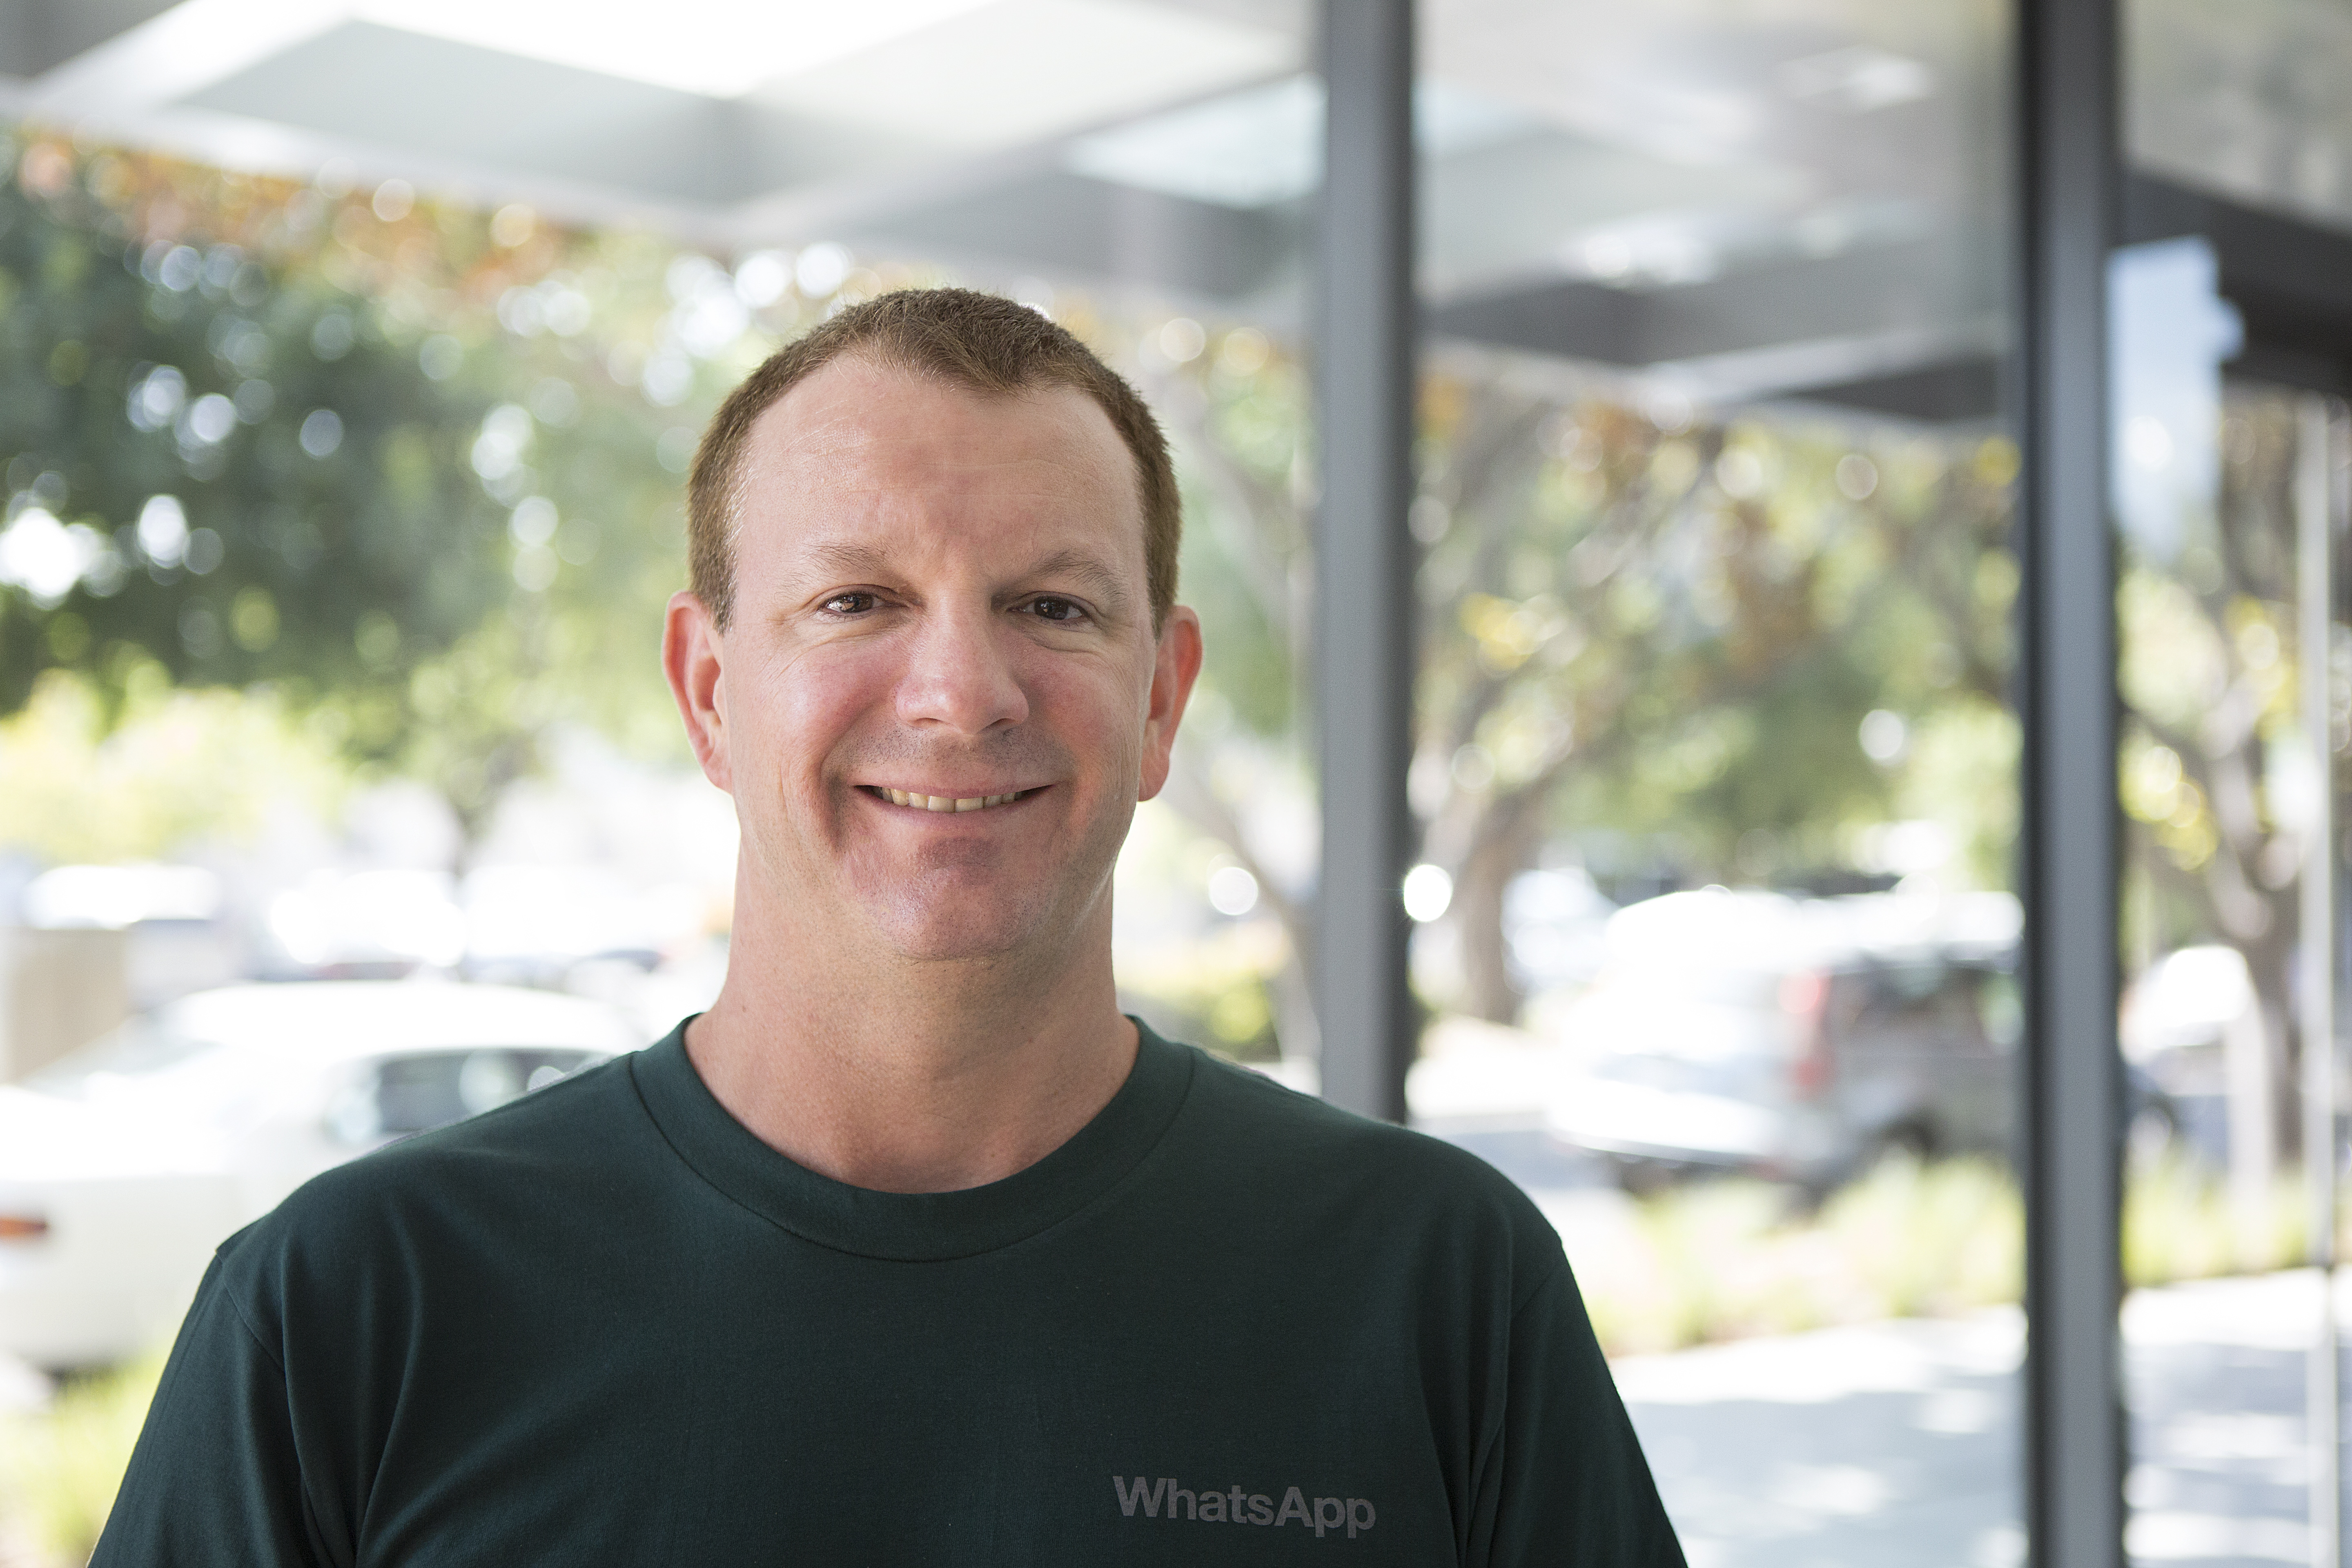 WhatsApp co-founder Brian Acton